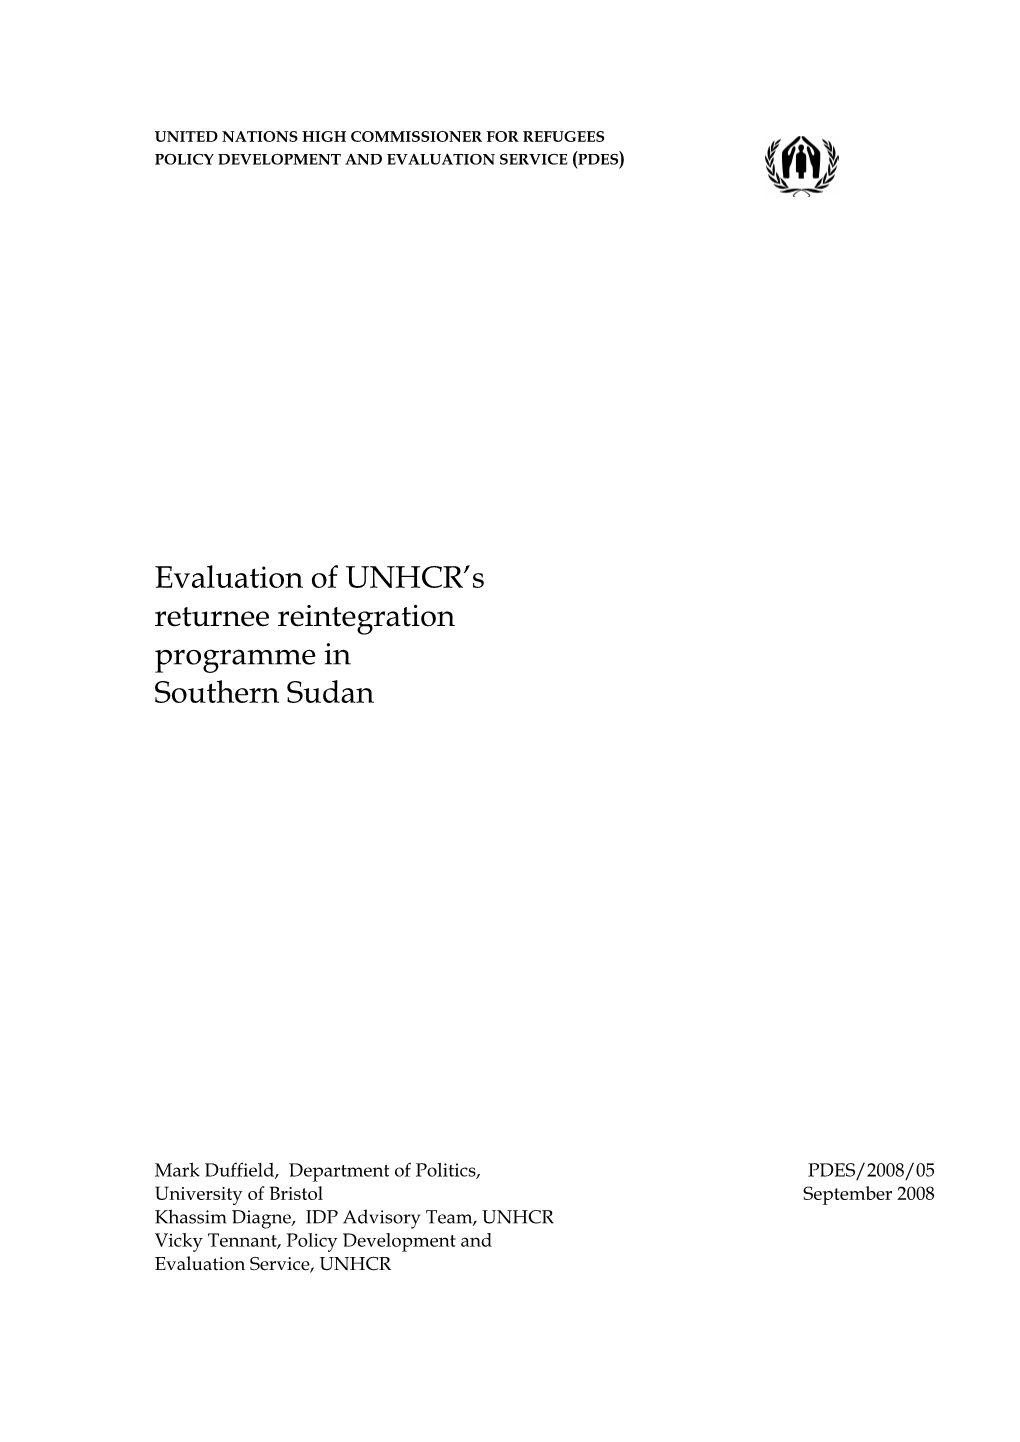 Evaluation of UNHCR's Returnee Reintegration Programme in Southern Sudan